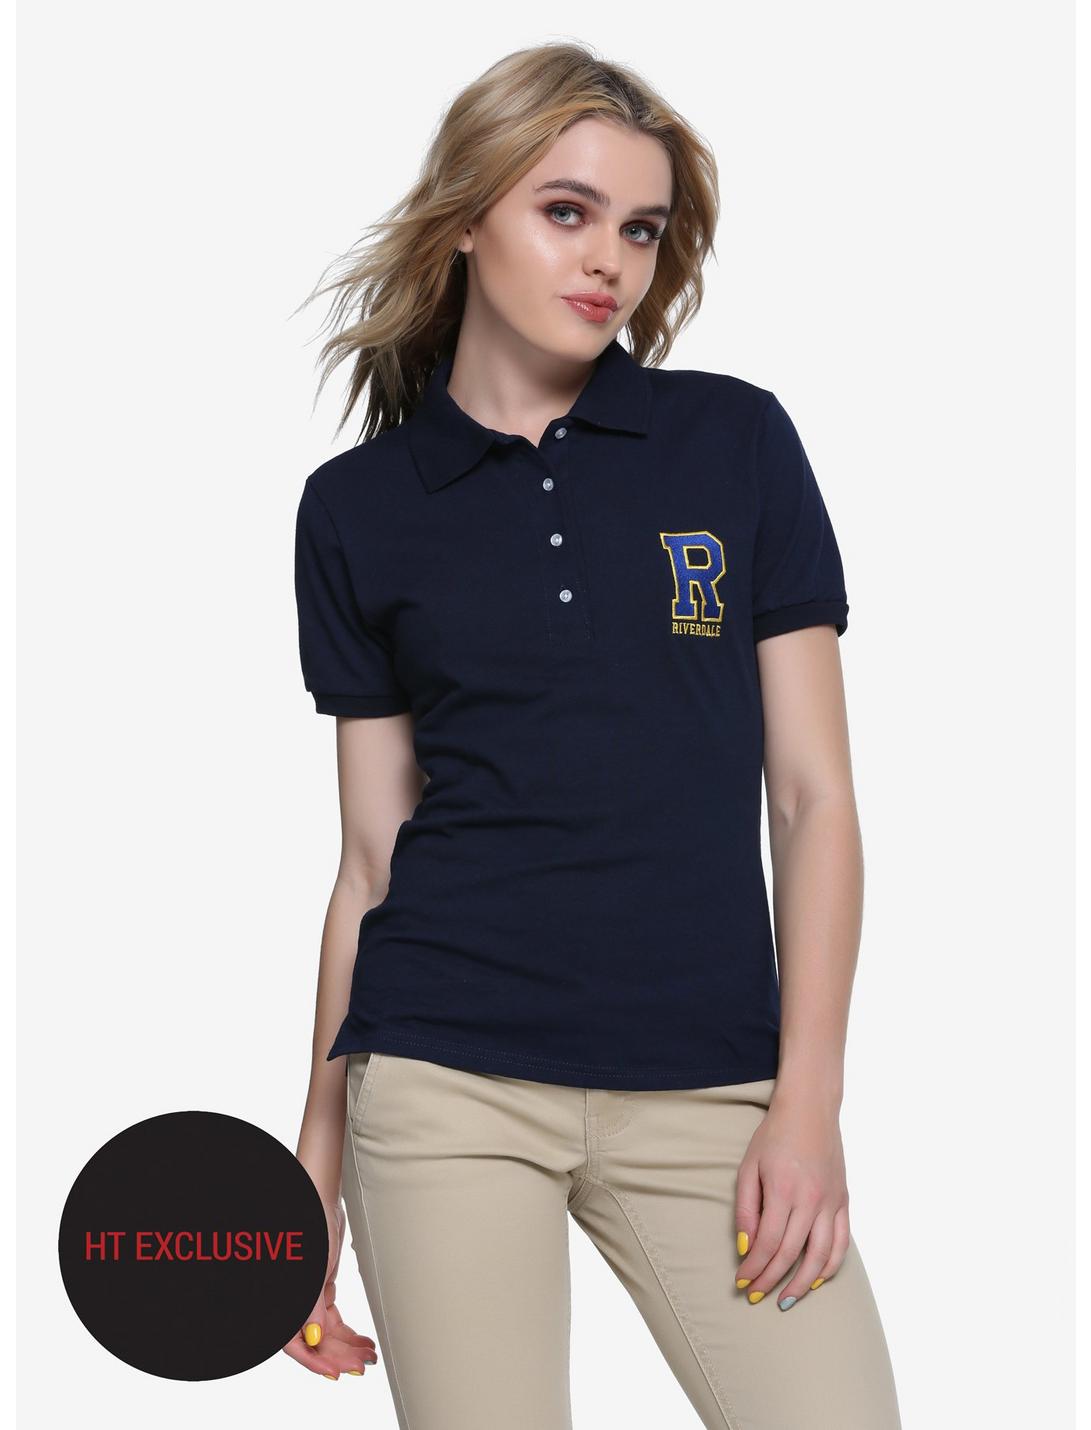 Riverdale Logo Girls Polo Shirt Hot Topic Exclusive, BLUE, hi-res